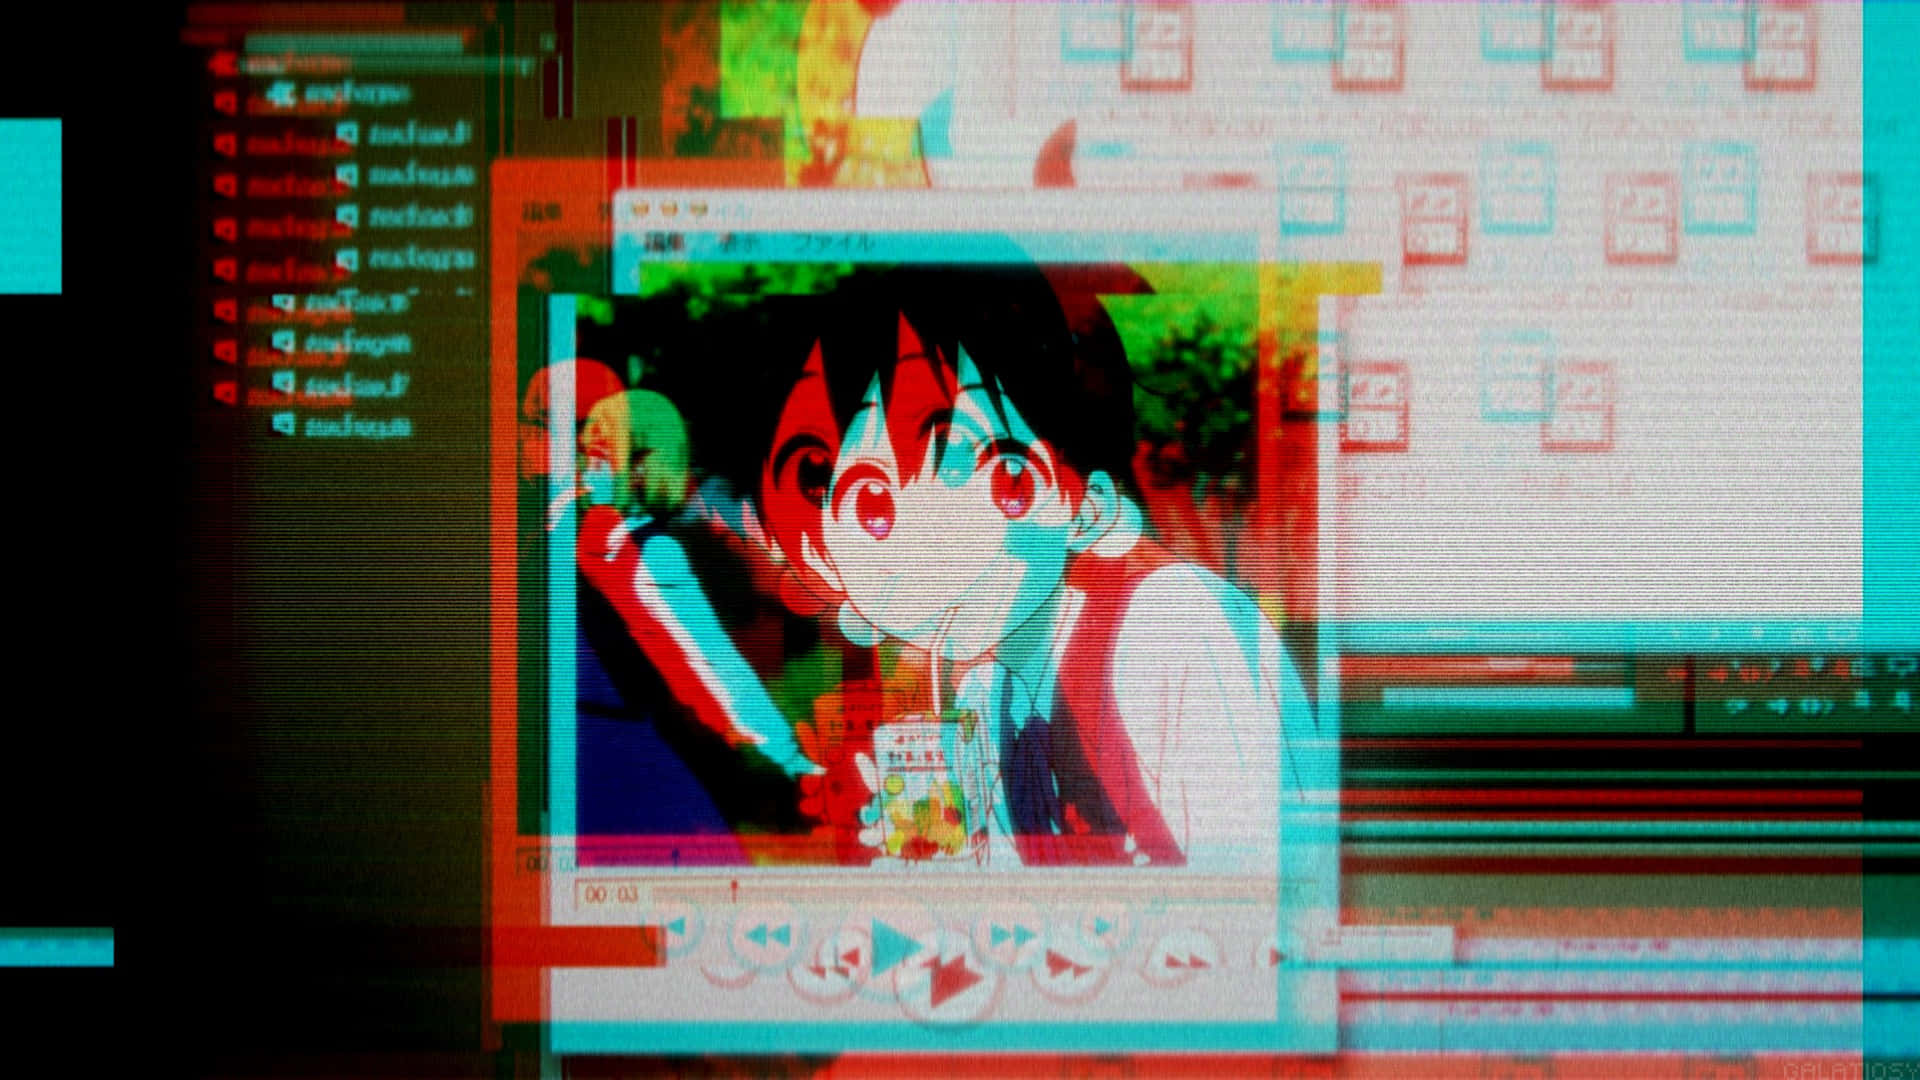 Encomputerskærm Med Anime Karakterer På Det.